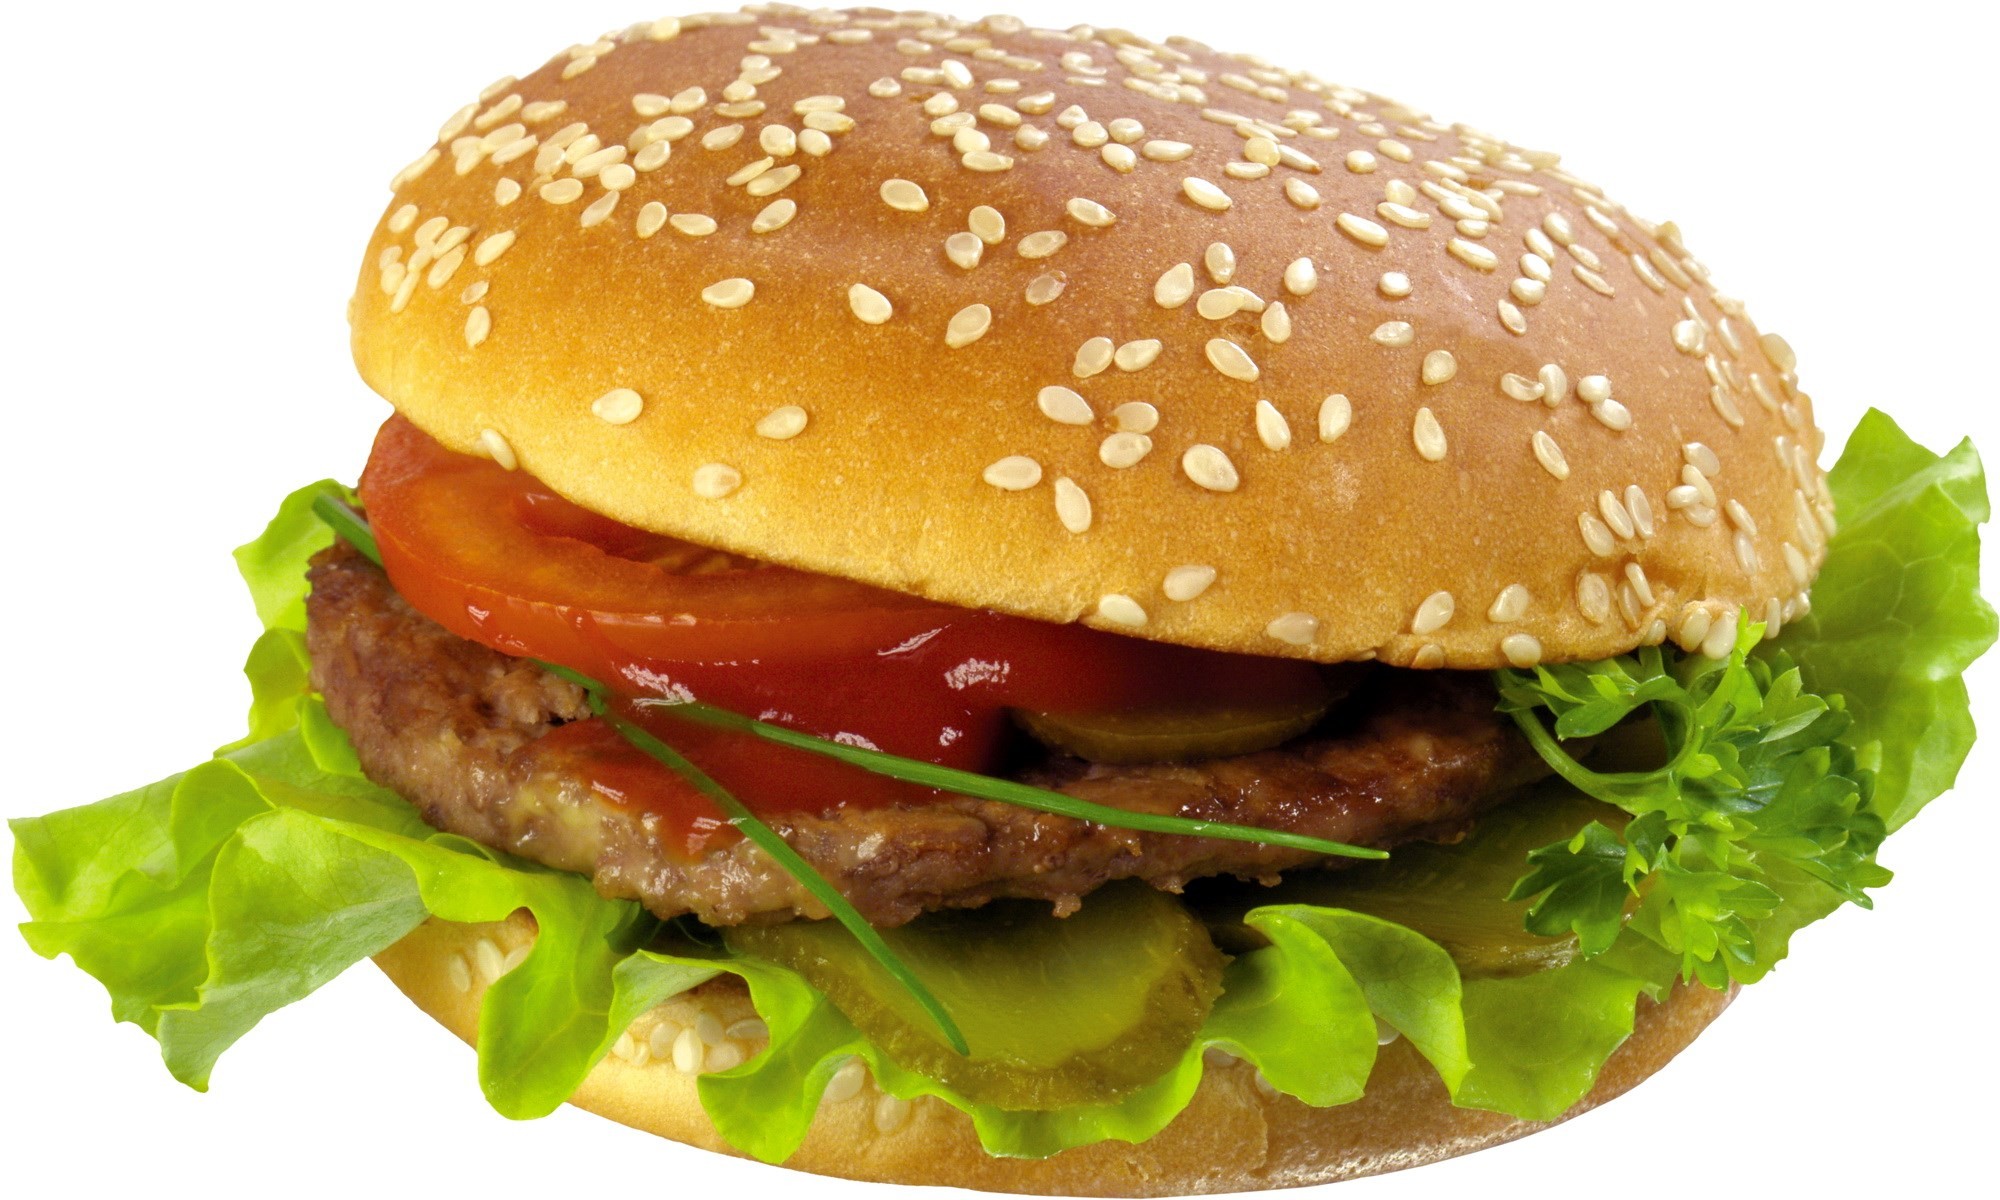 2000x1200 burger wallpaper for desktops - burger category